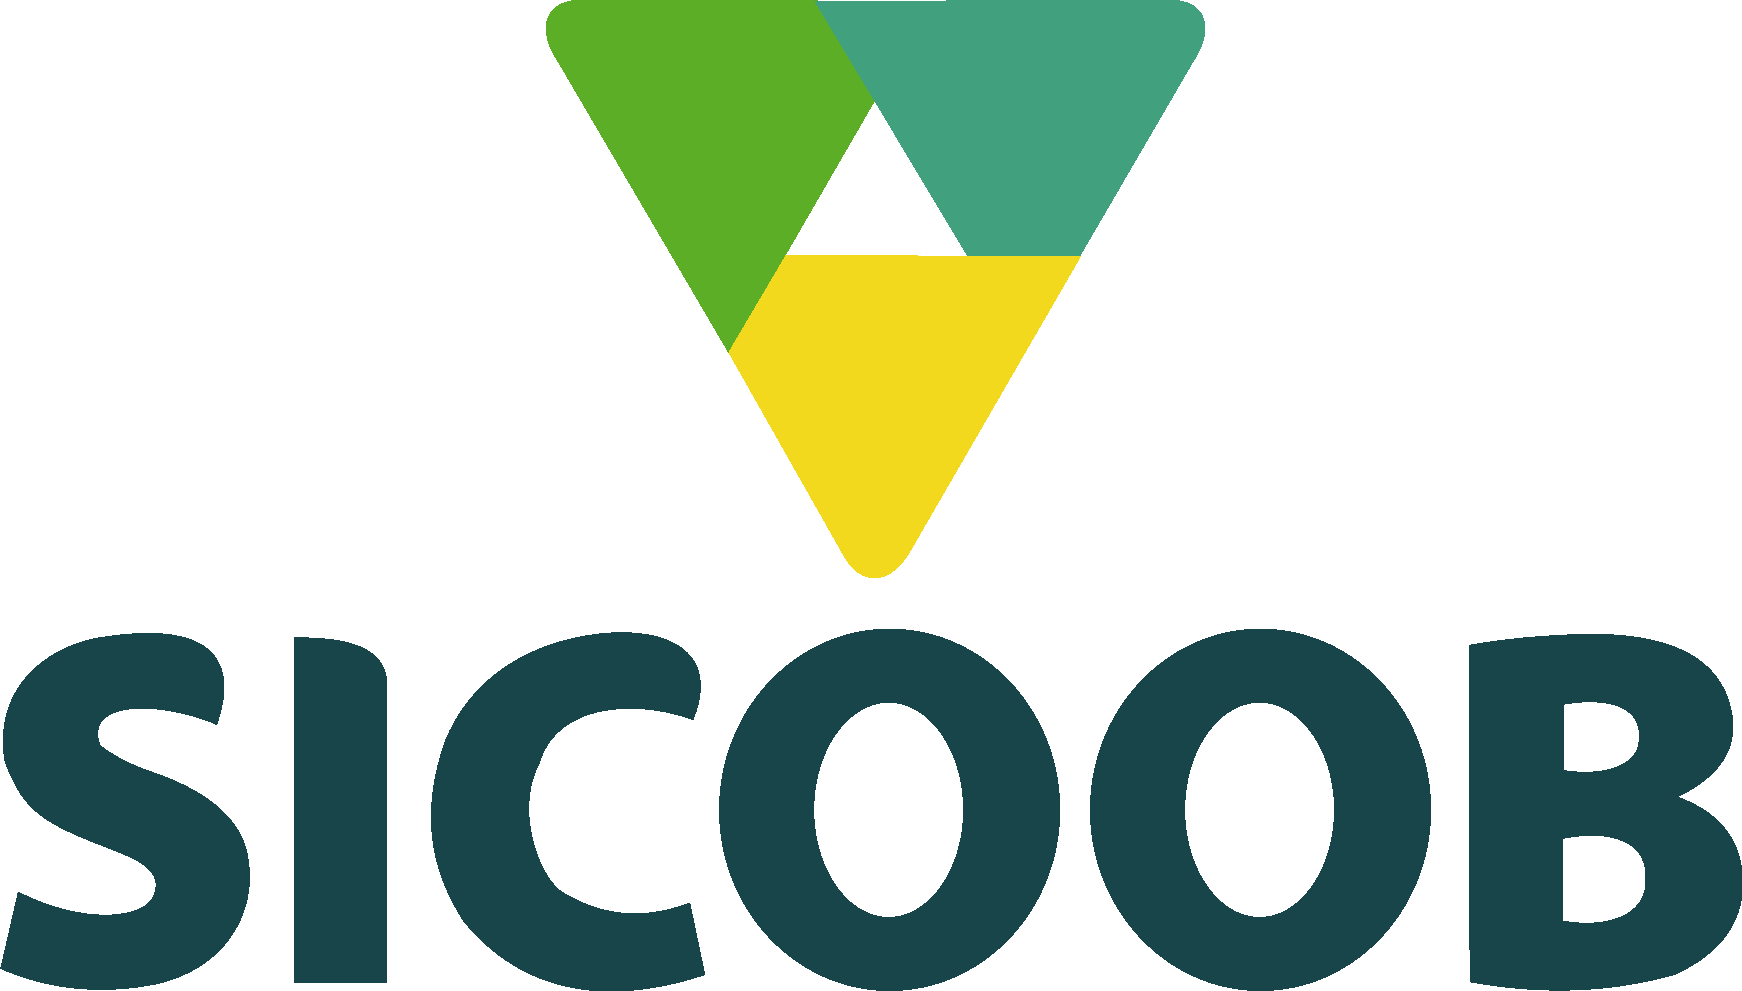 Sicoob Brand Logo